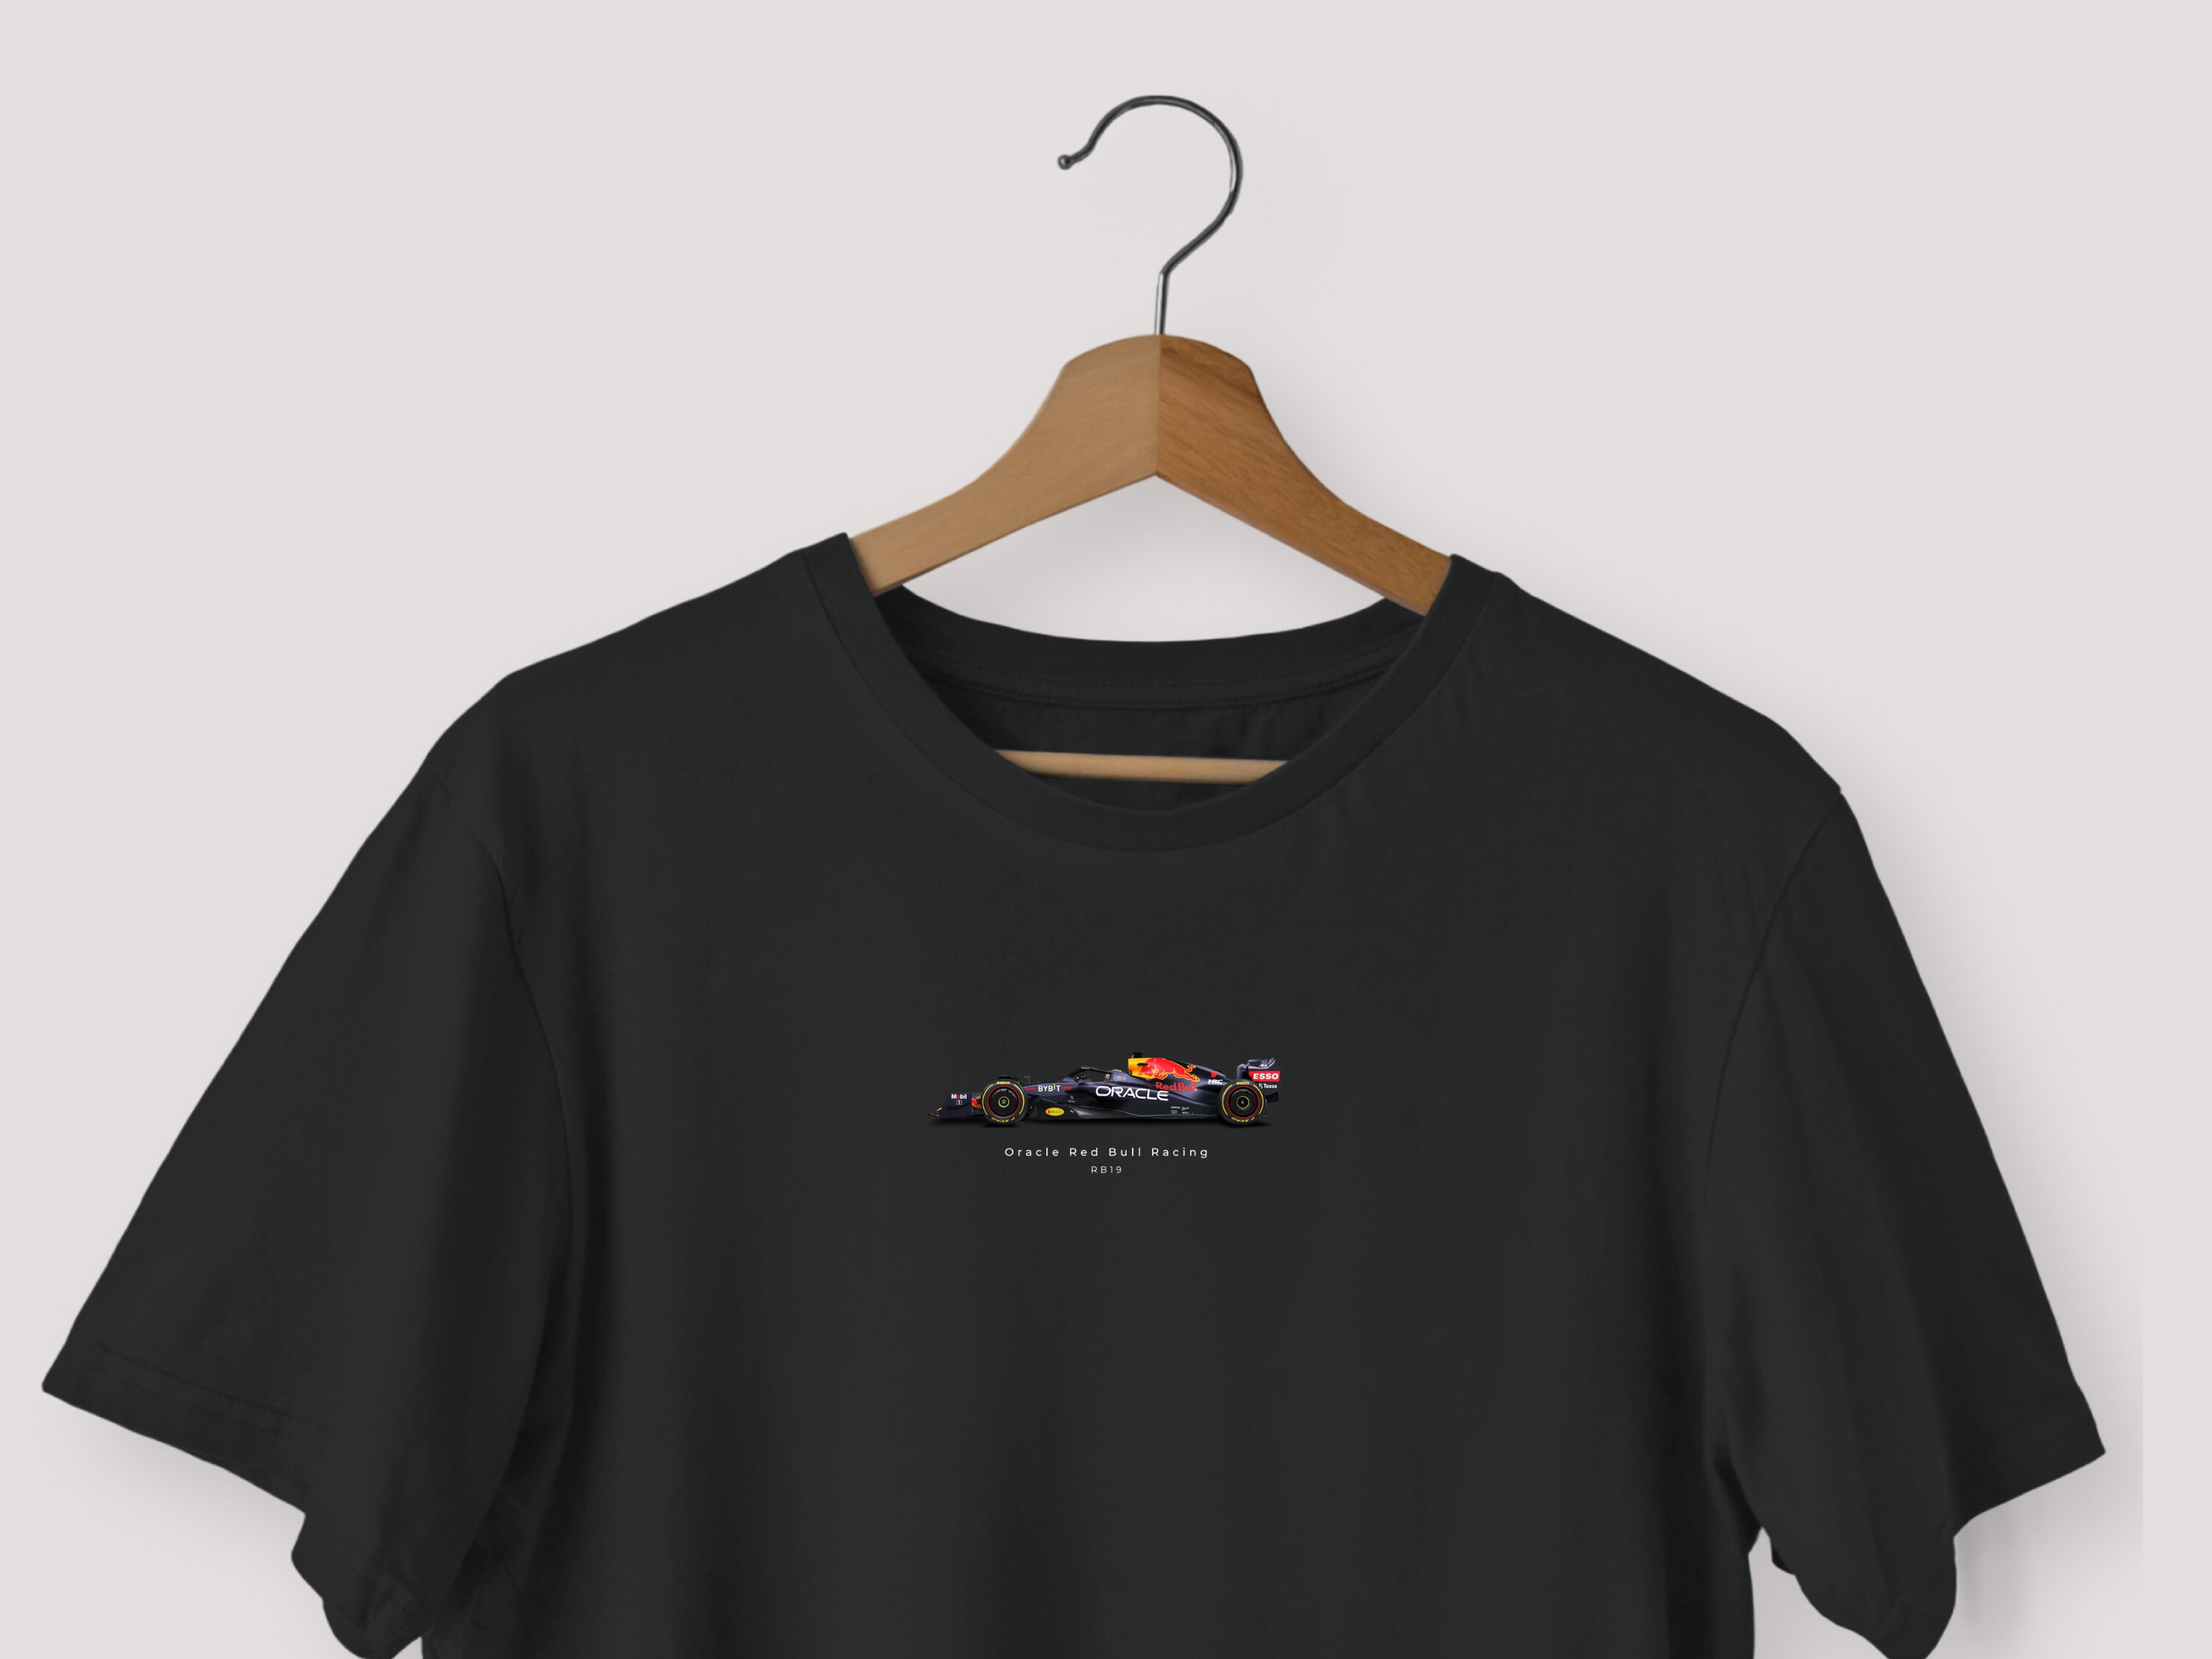 Redbull Ktm Racing Polo Shirts with Printing and Custom Design - China  Printing and Sports Clothing price